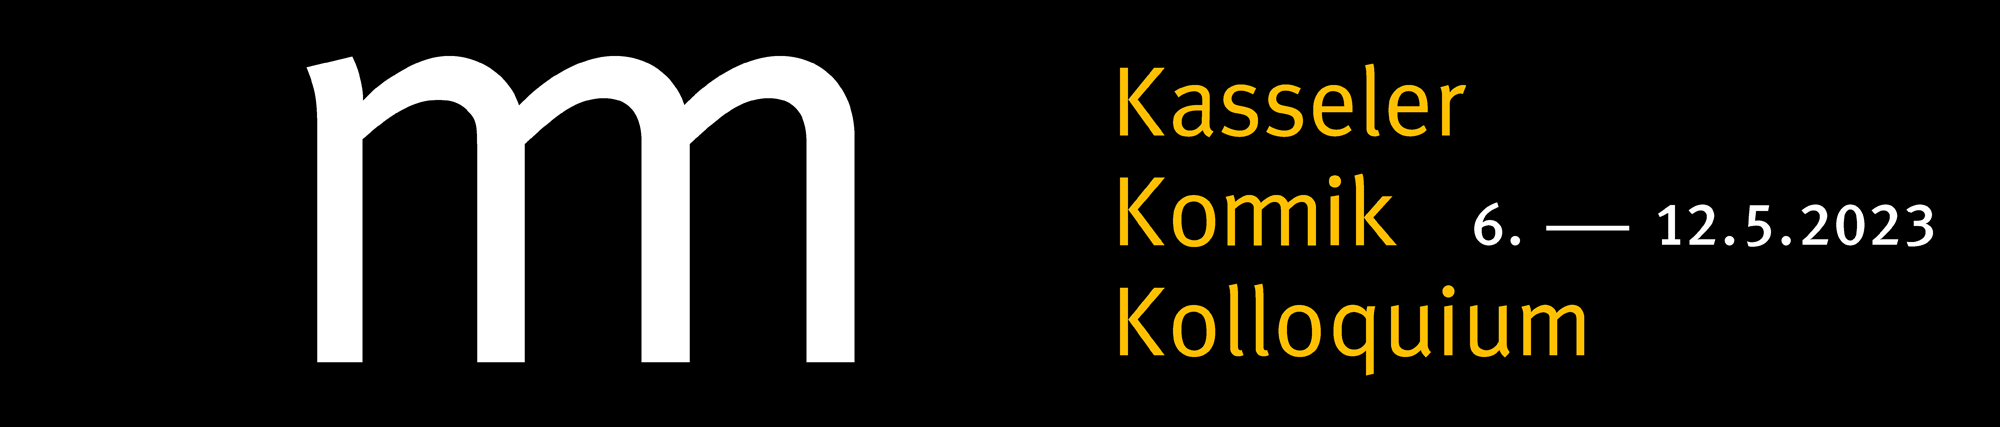 Kasseler Komik Kolloquium